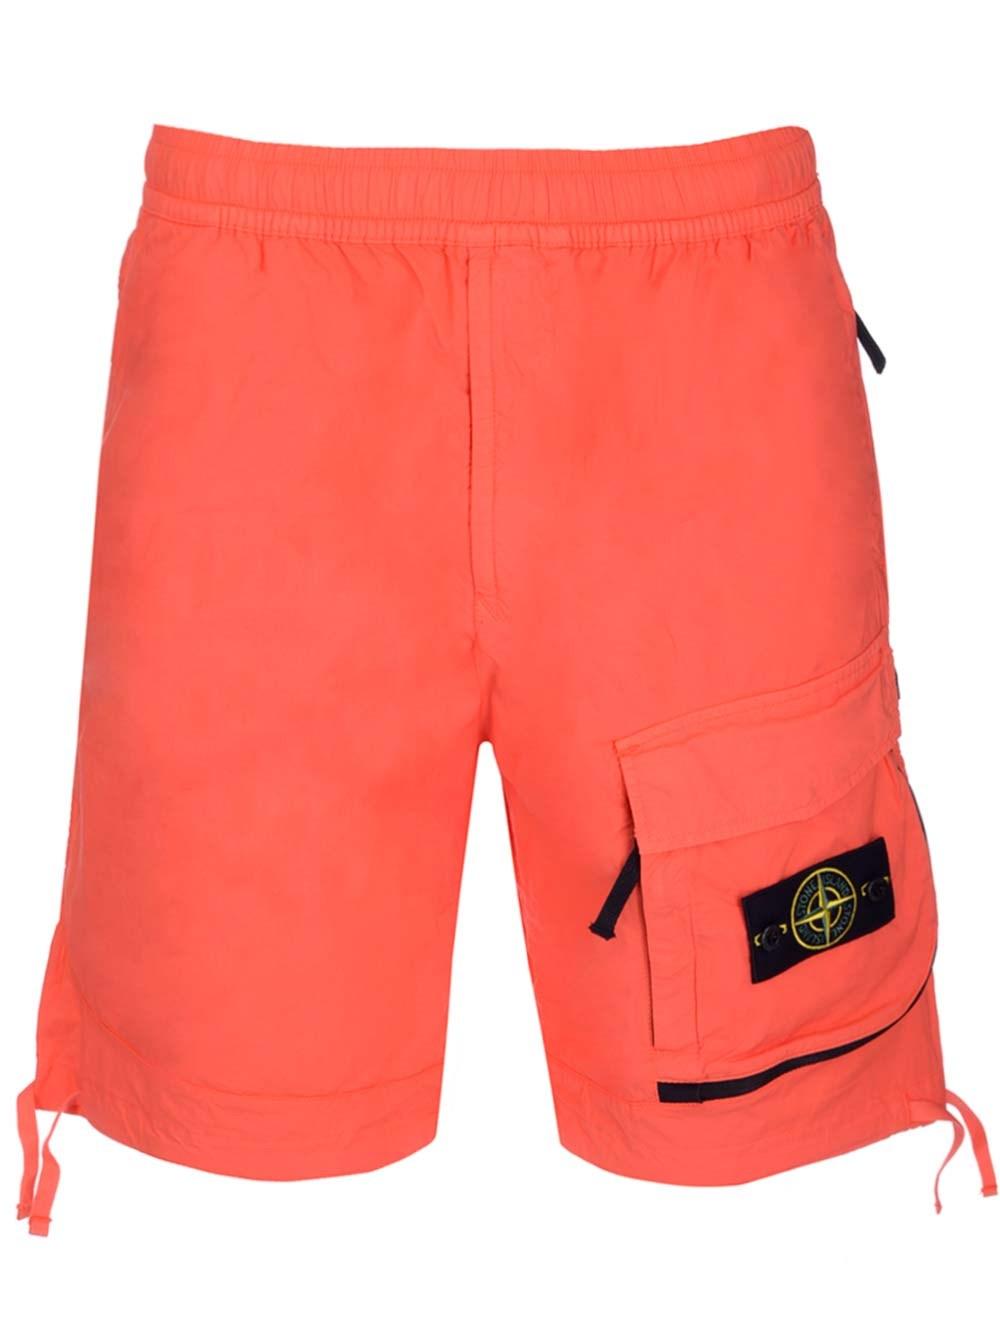 Stone Island Orange Cargo Shorts for Men | Lyst